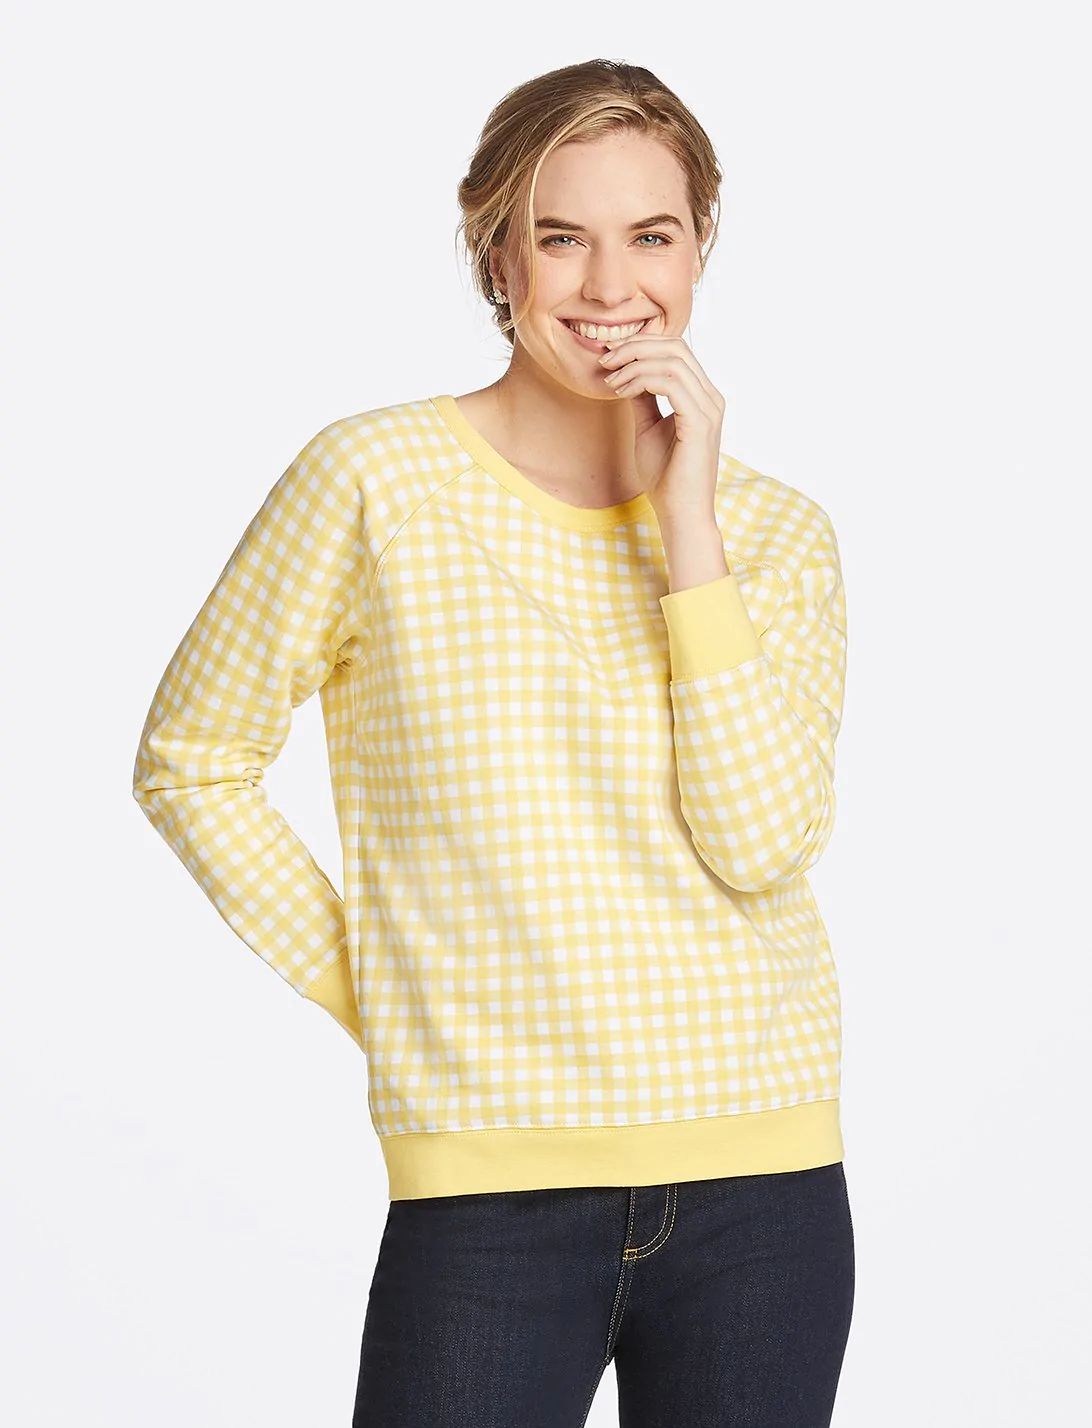 Natalie Sweatshirt in Yellow Gingham | Draper James (US)